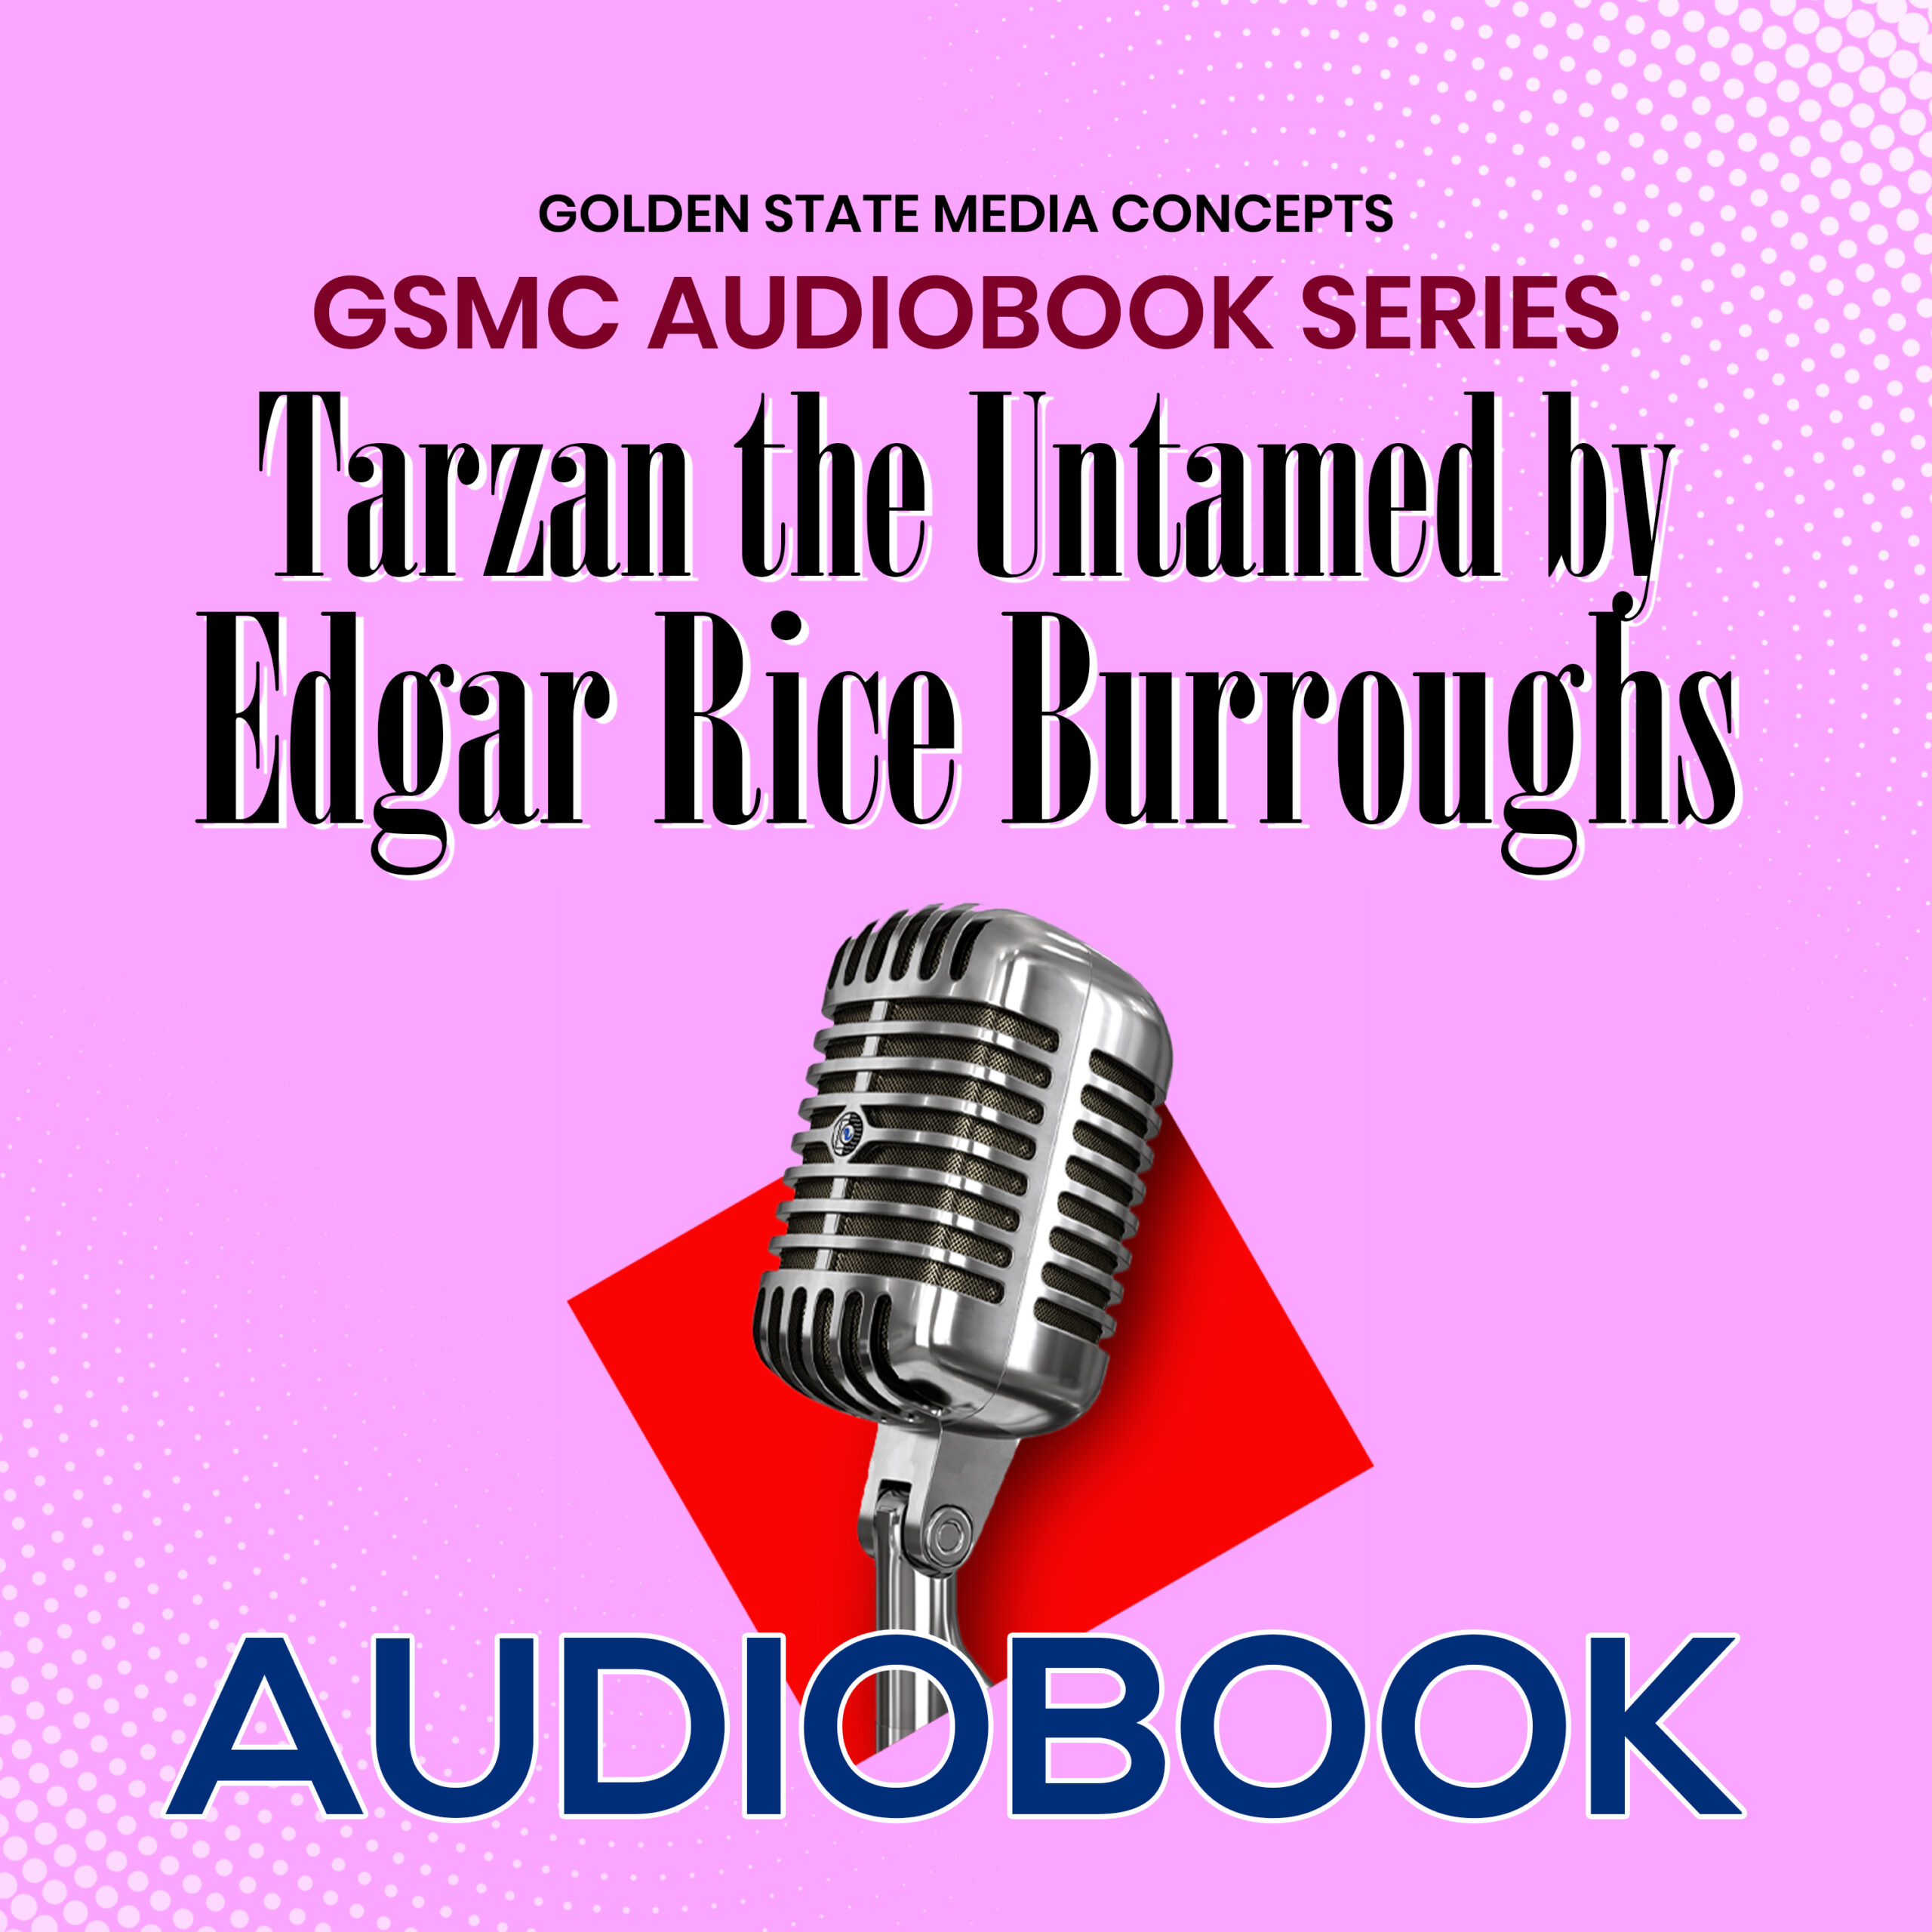 GSMC Audiobook Series: Tarzan the Untamed